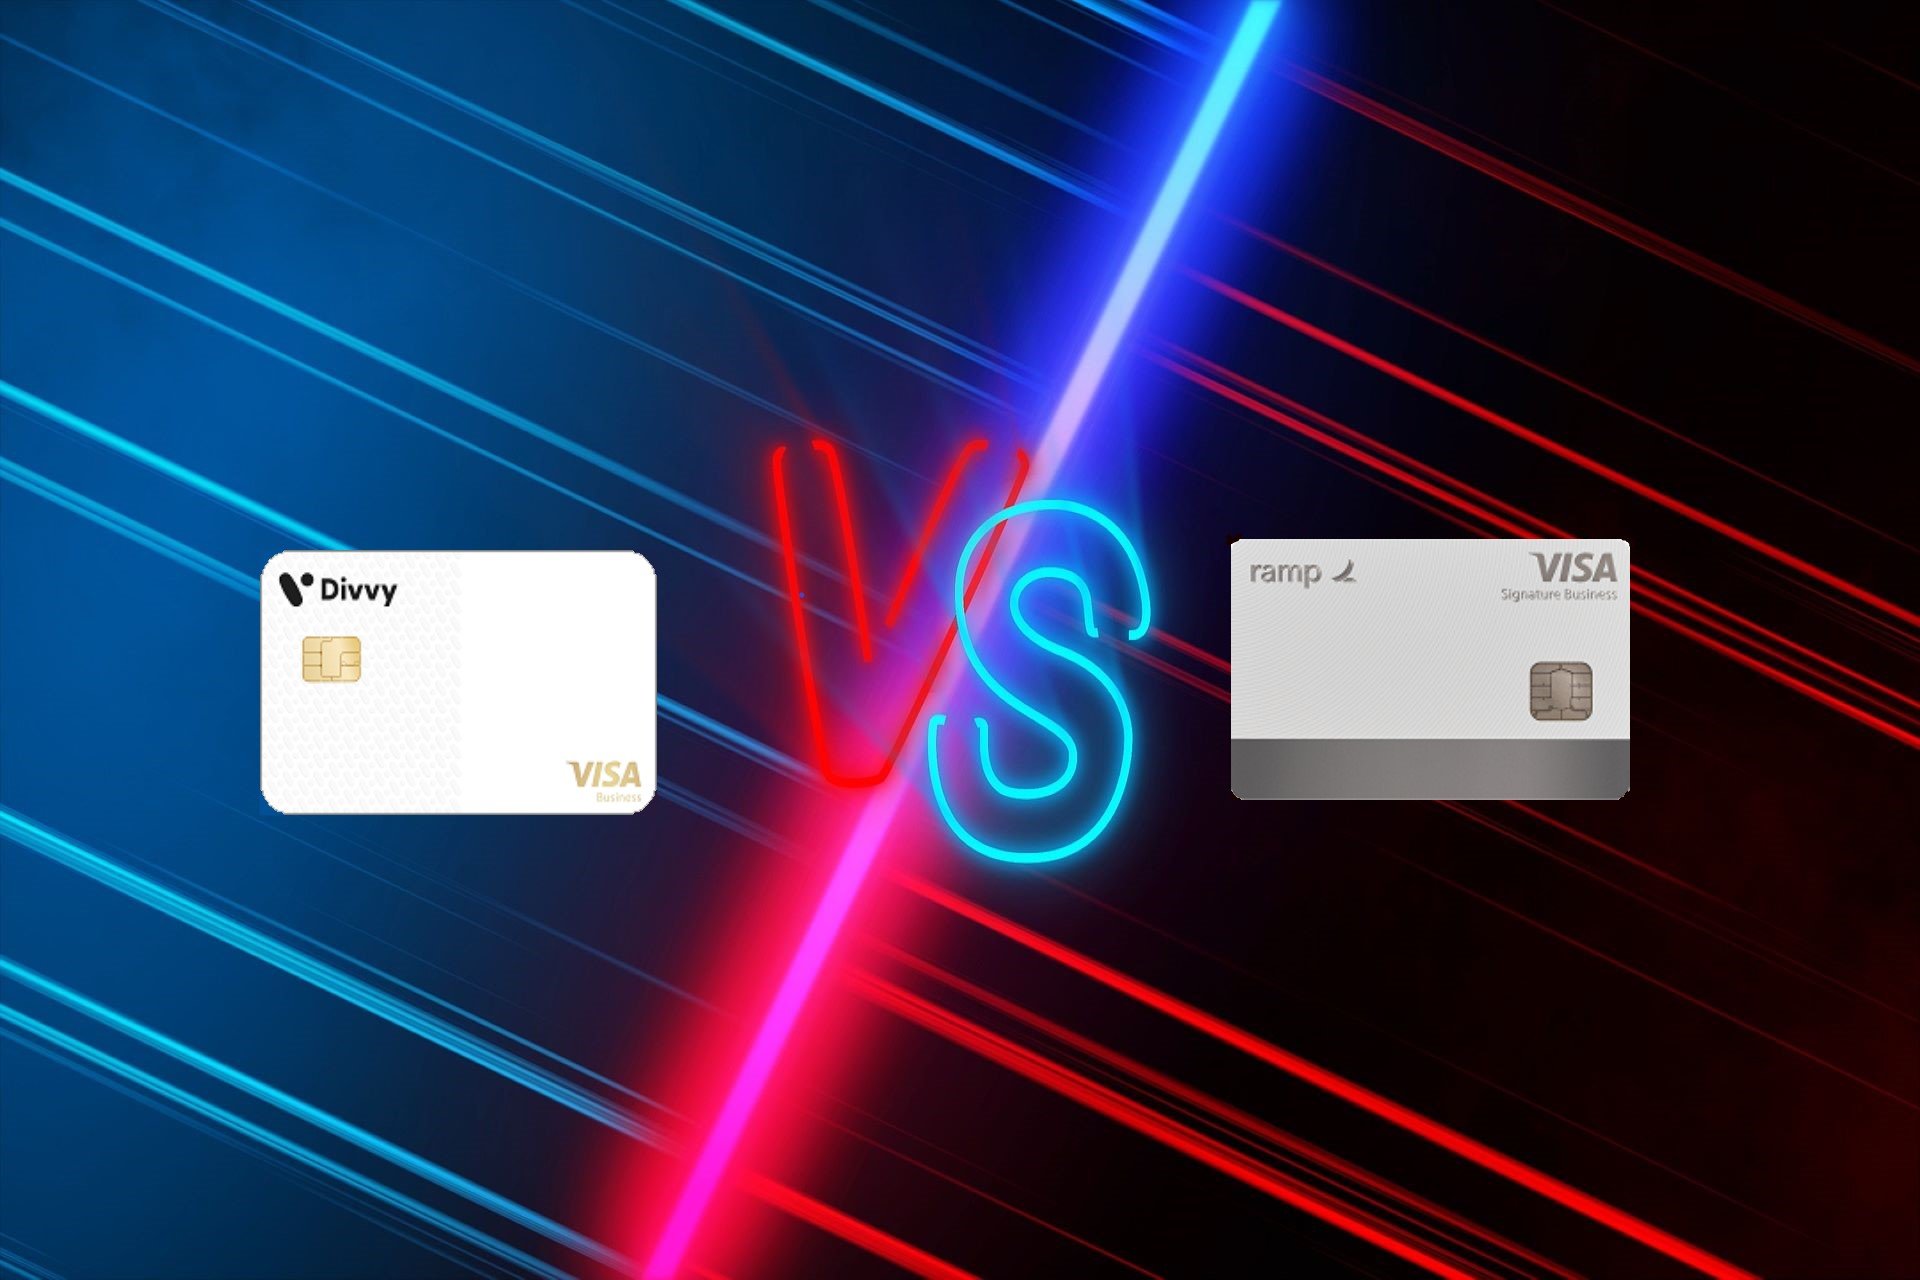 Divvy Vs. Ramp corporate card comparison